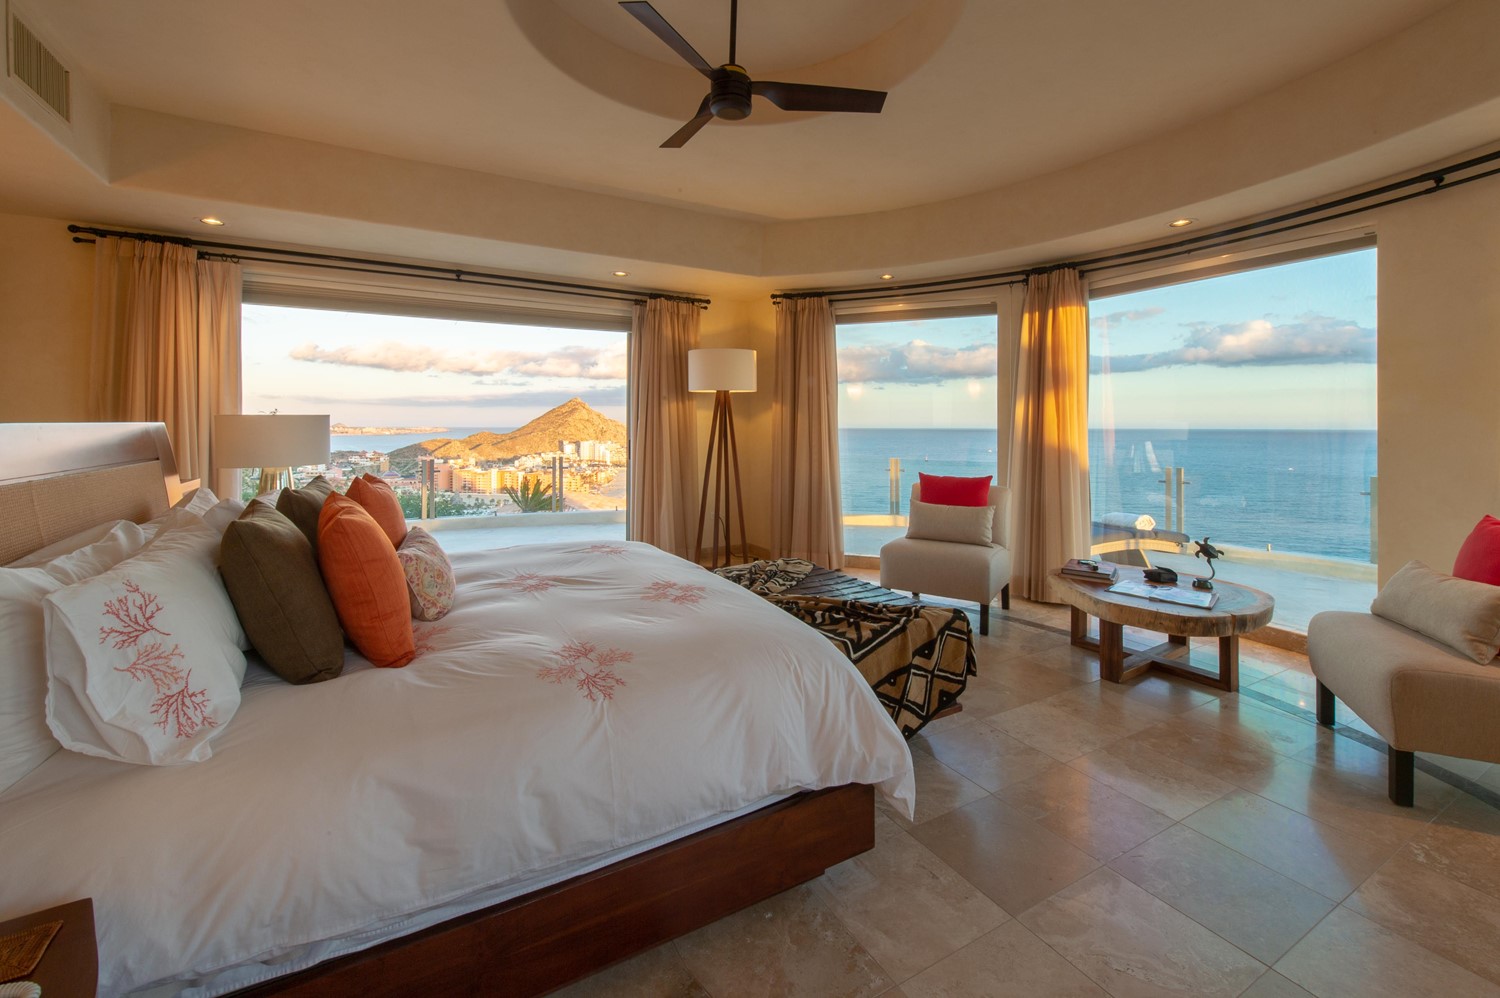 Luxury private vacation rental Villa Penasco in Cabo San Lucas Mexico